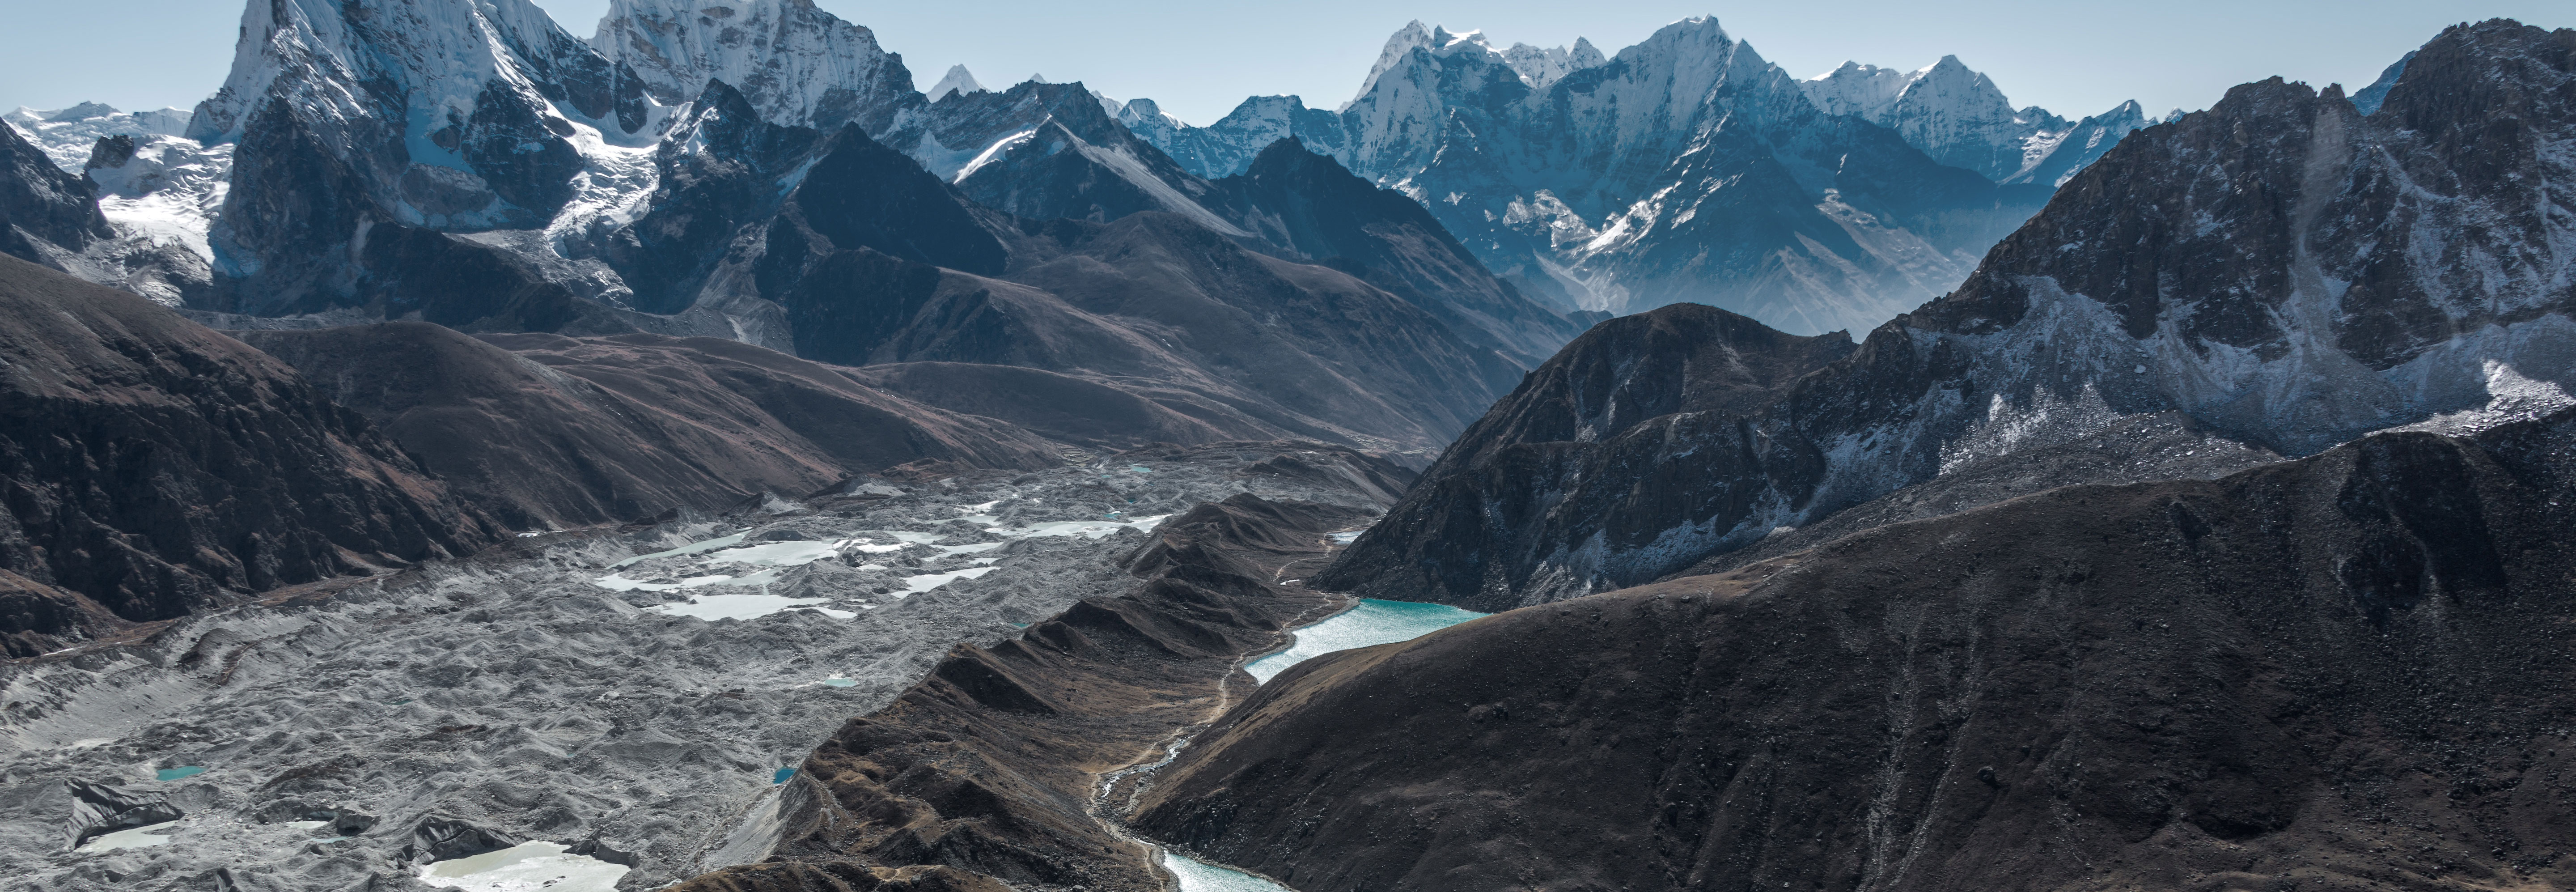 Gletsjers in de himalaya - klimaatverandering